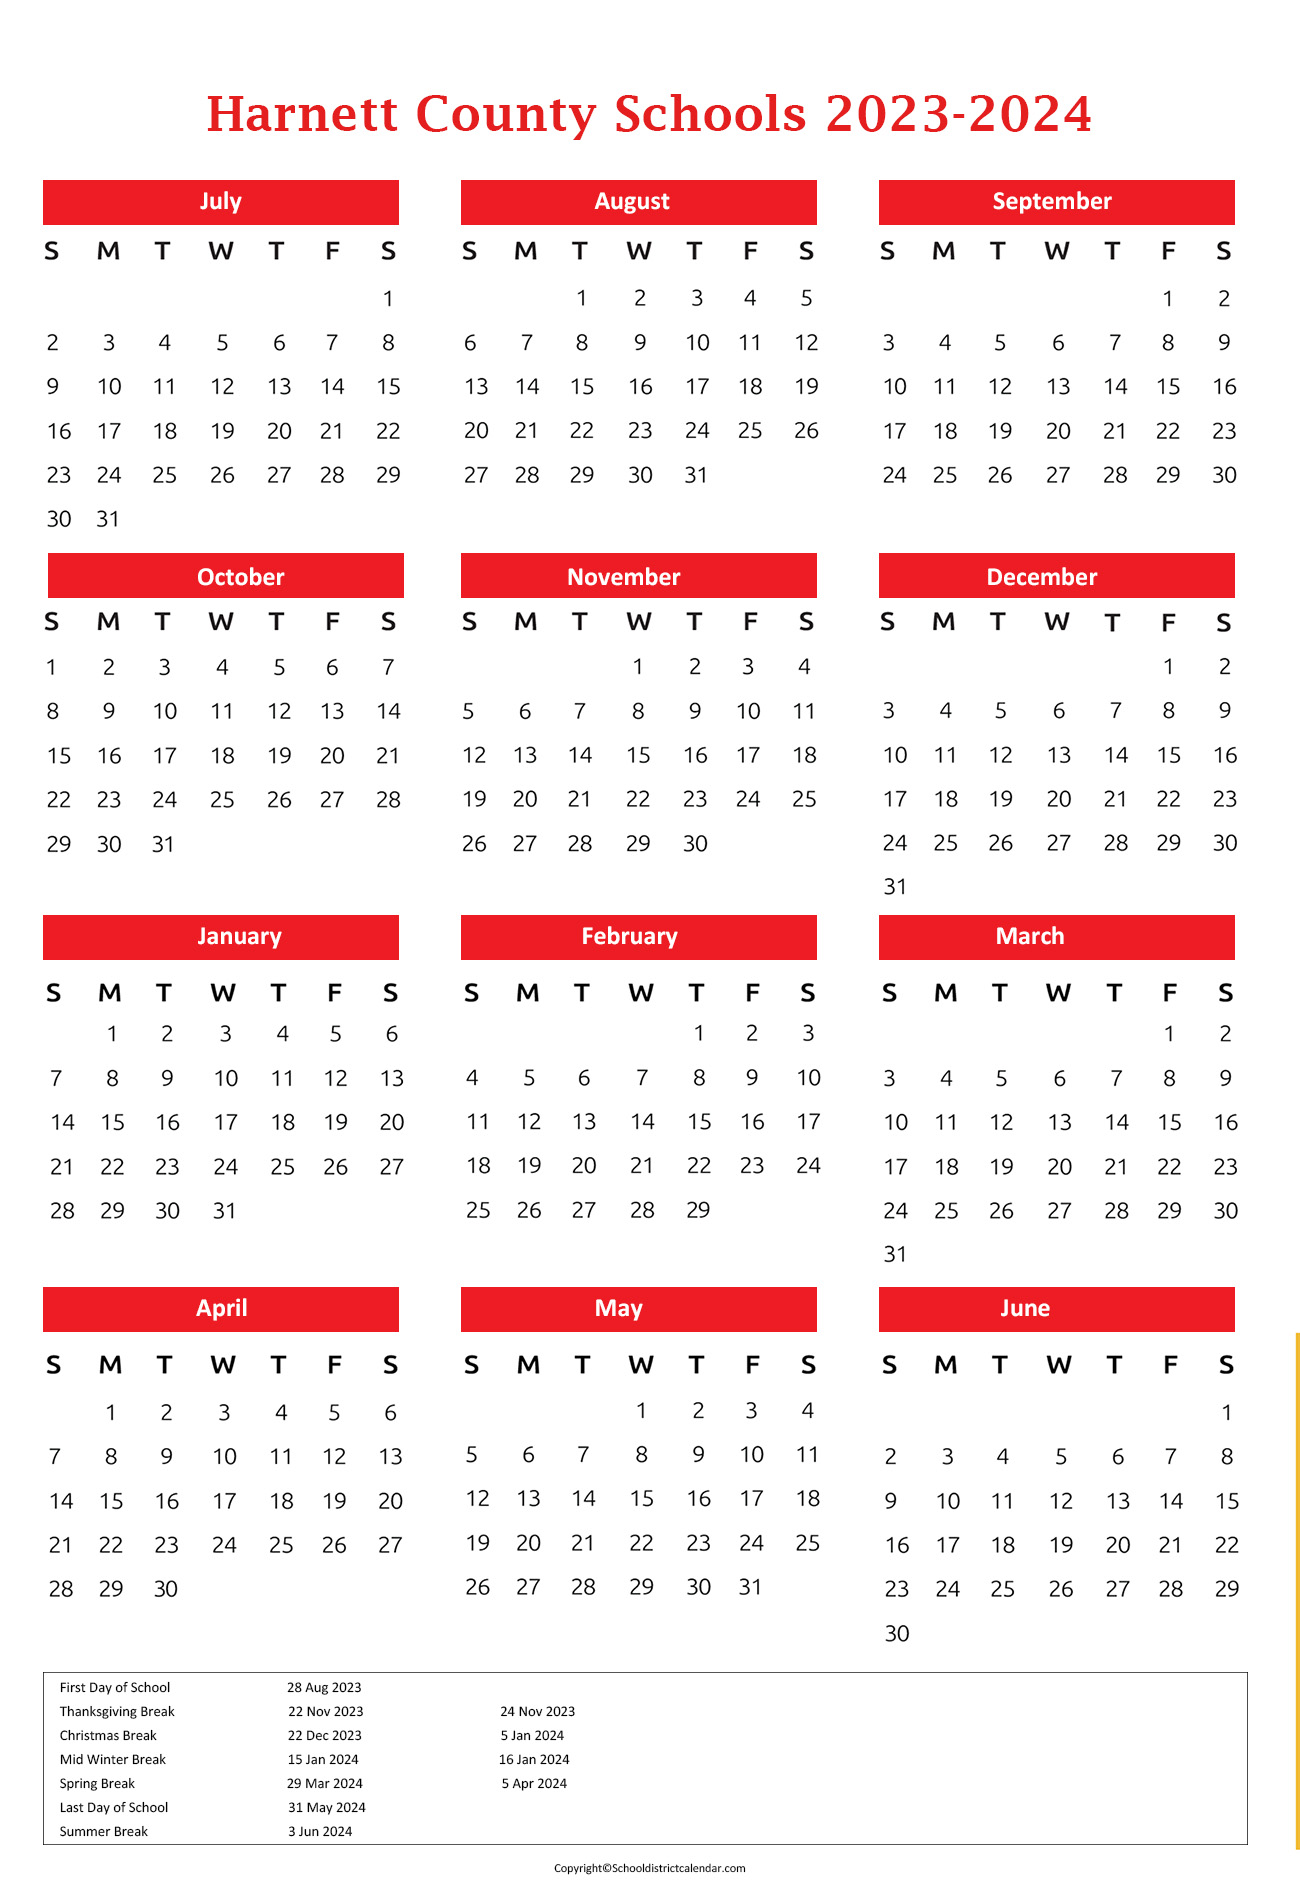 harnett-county-schools-calendar-holidays-2023-2024